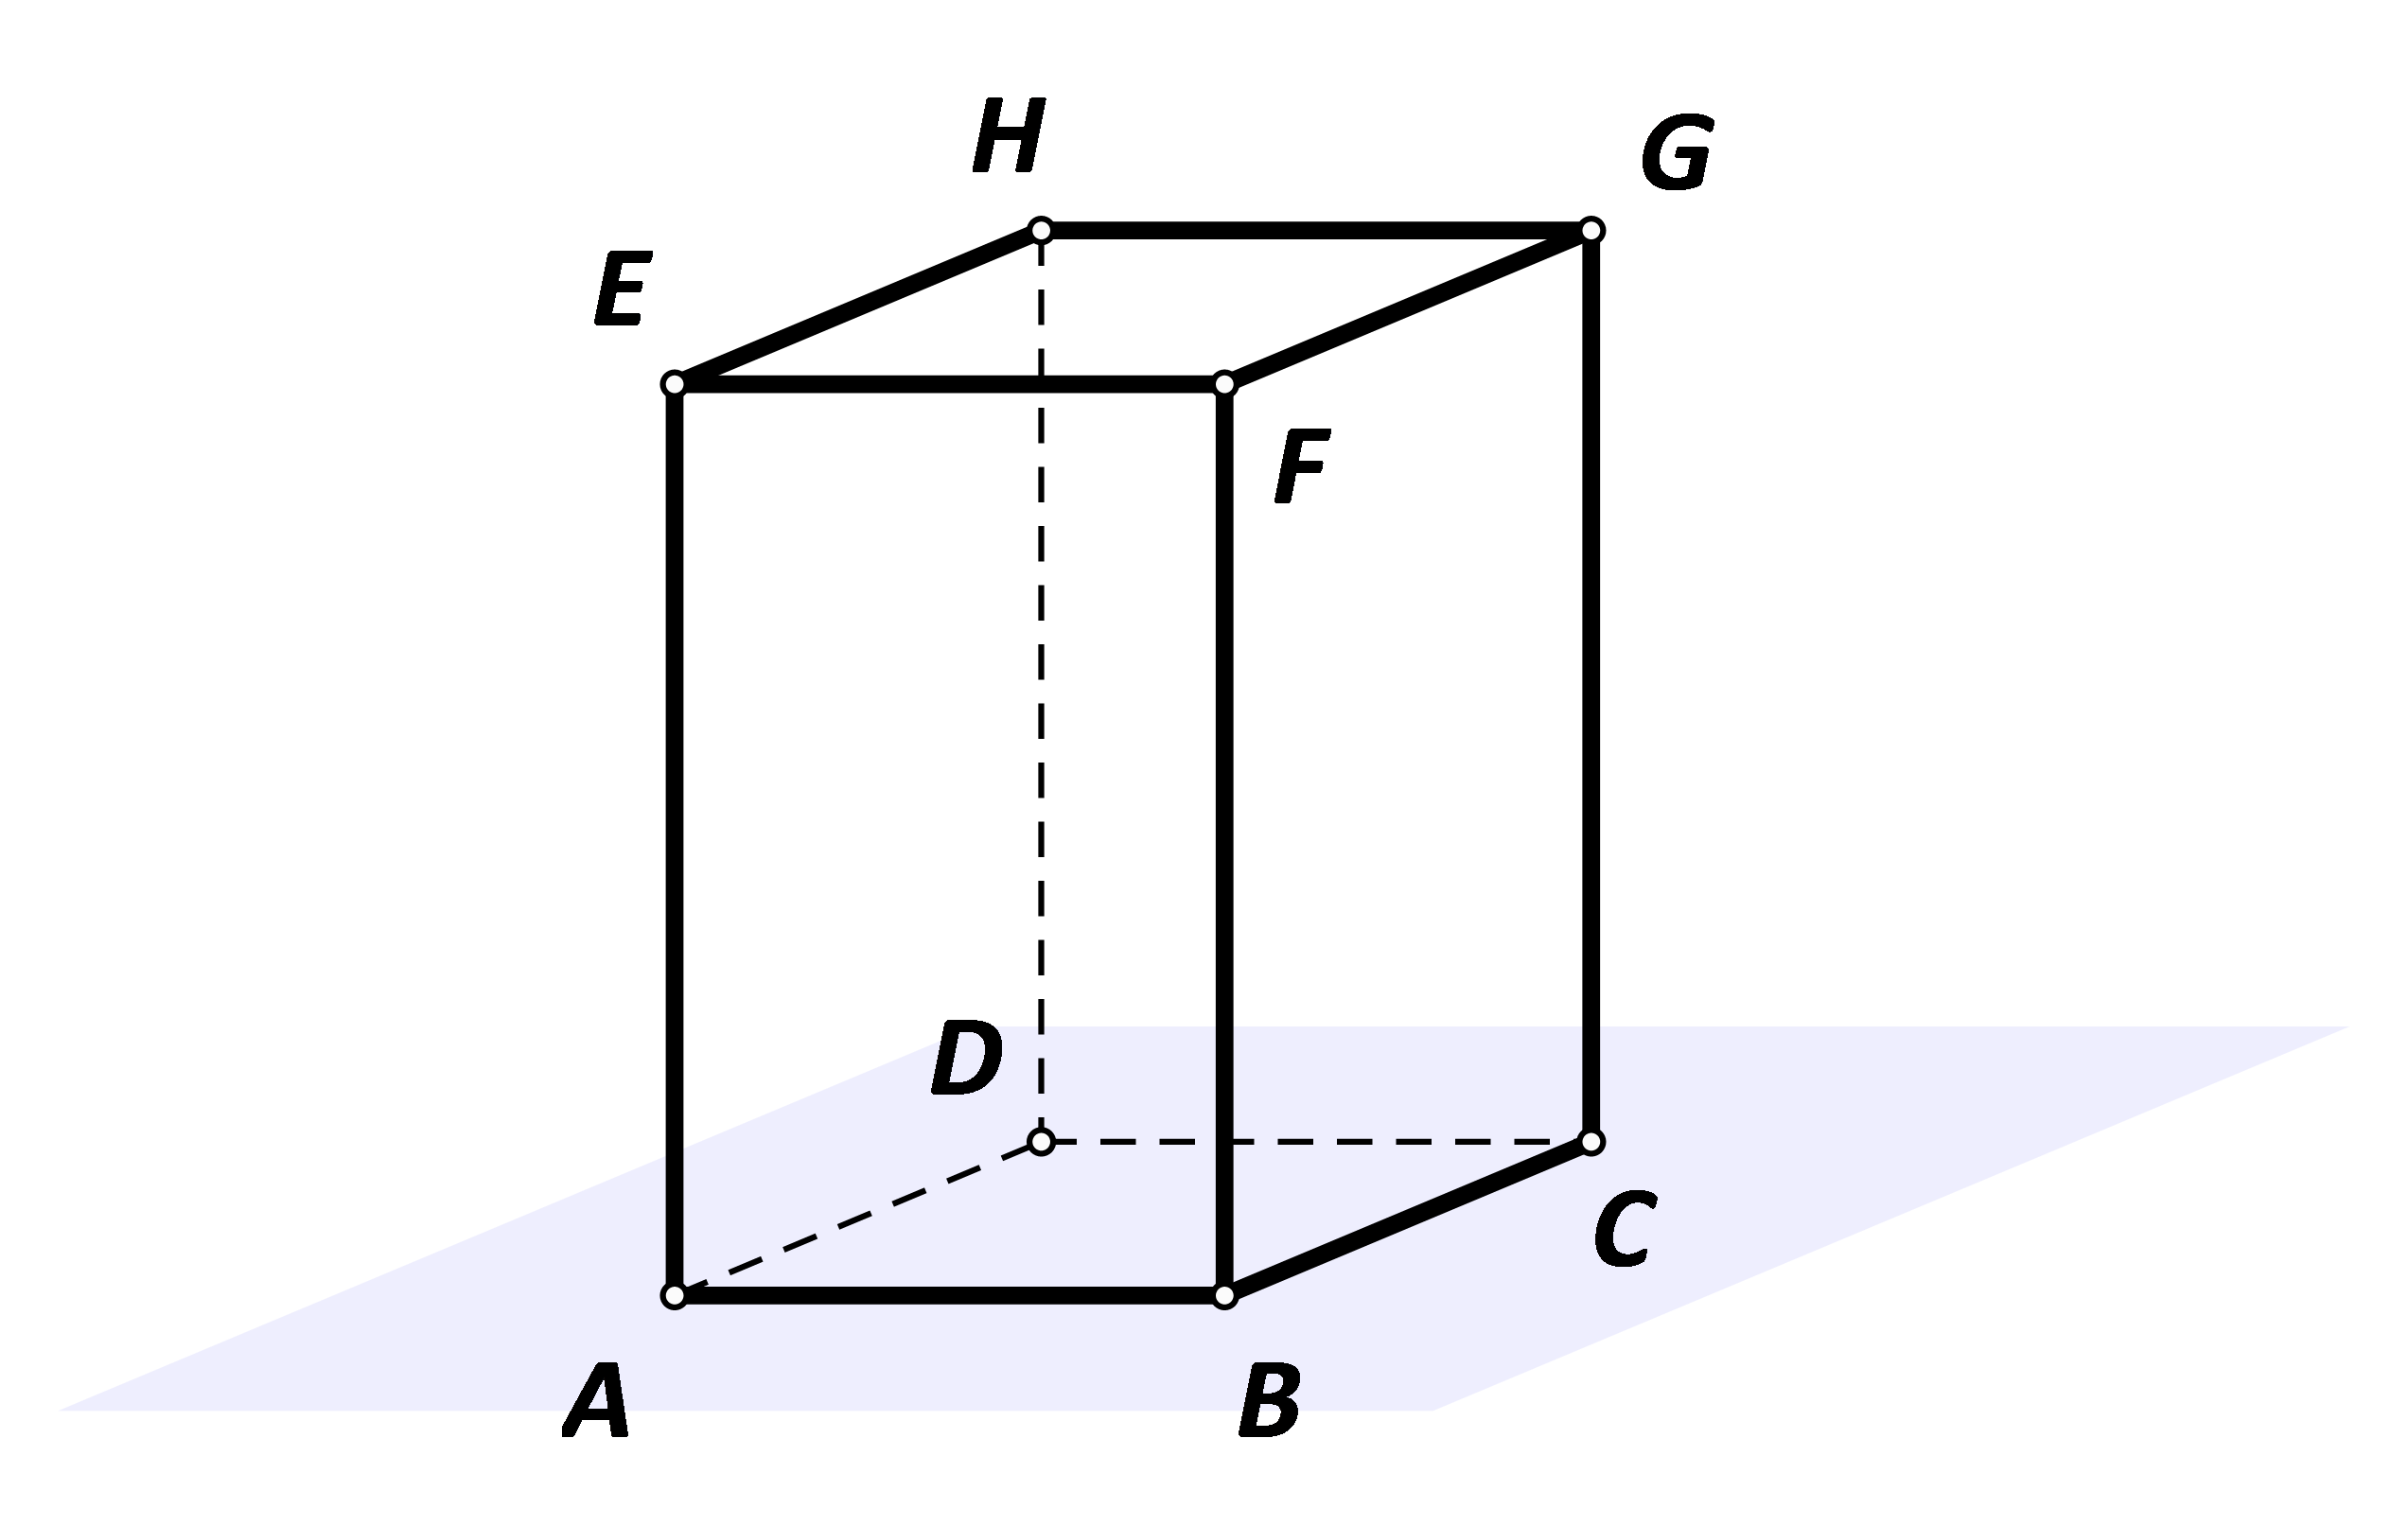 Na slici je prikazan kvadar ABCDEFGH s istaknutom ravninom ABC.